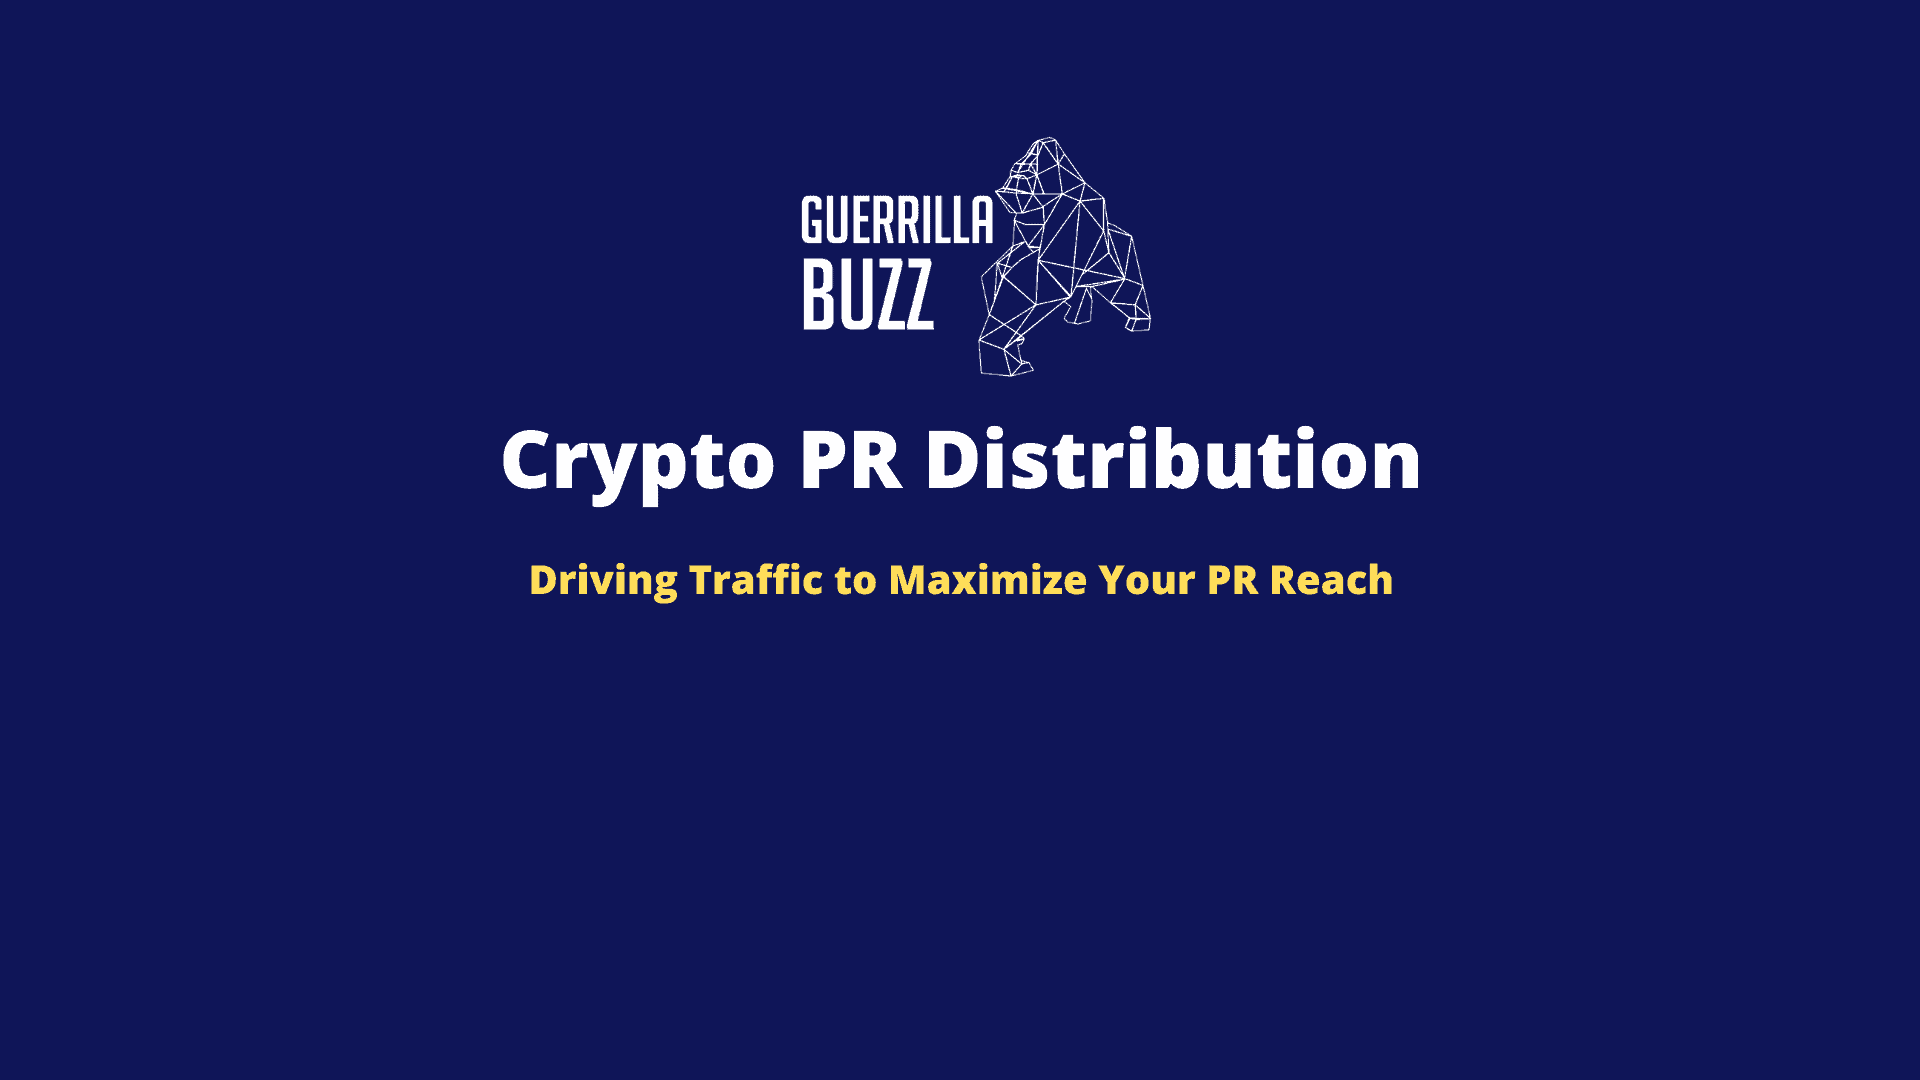 Crypto Pr Distrbution Guerrillabuzz Driving Traffic To Maximize Your PR Reach